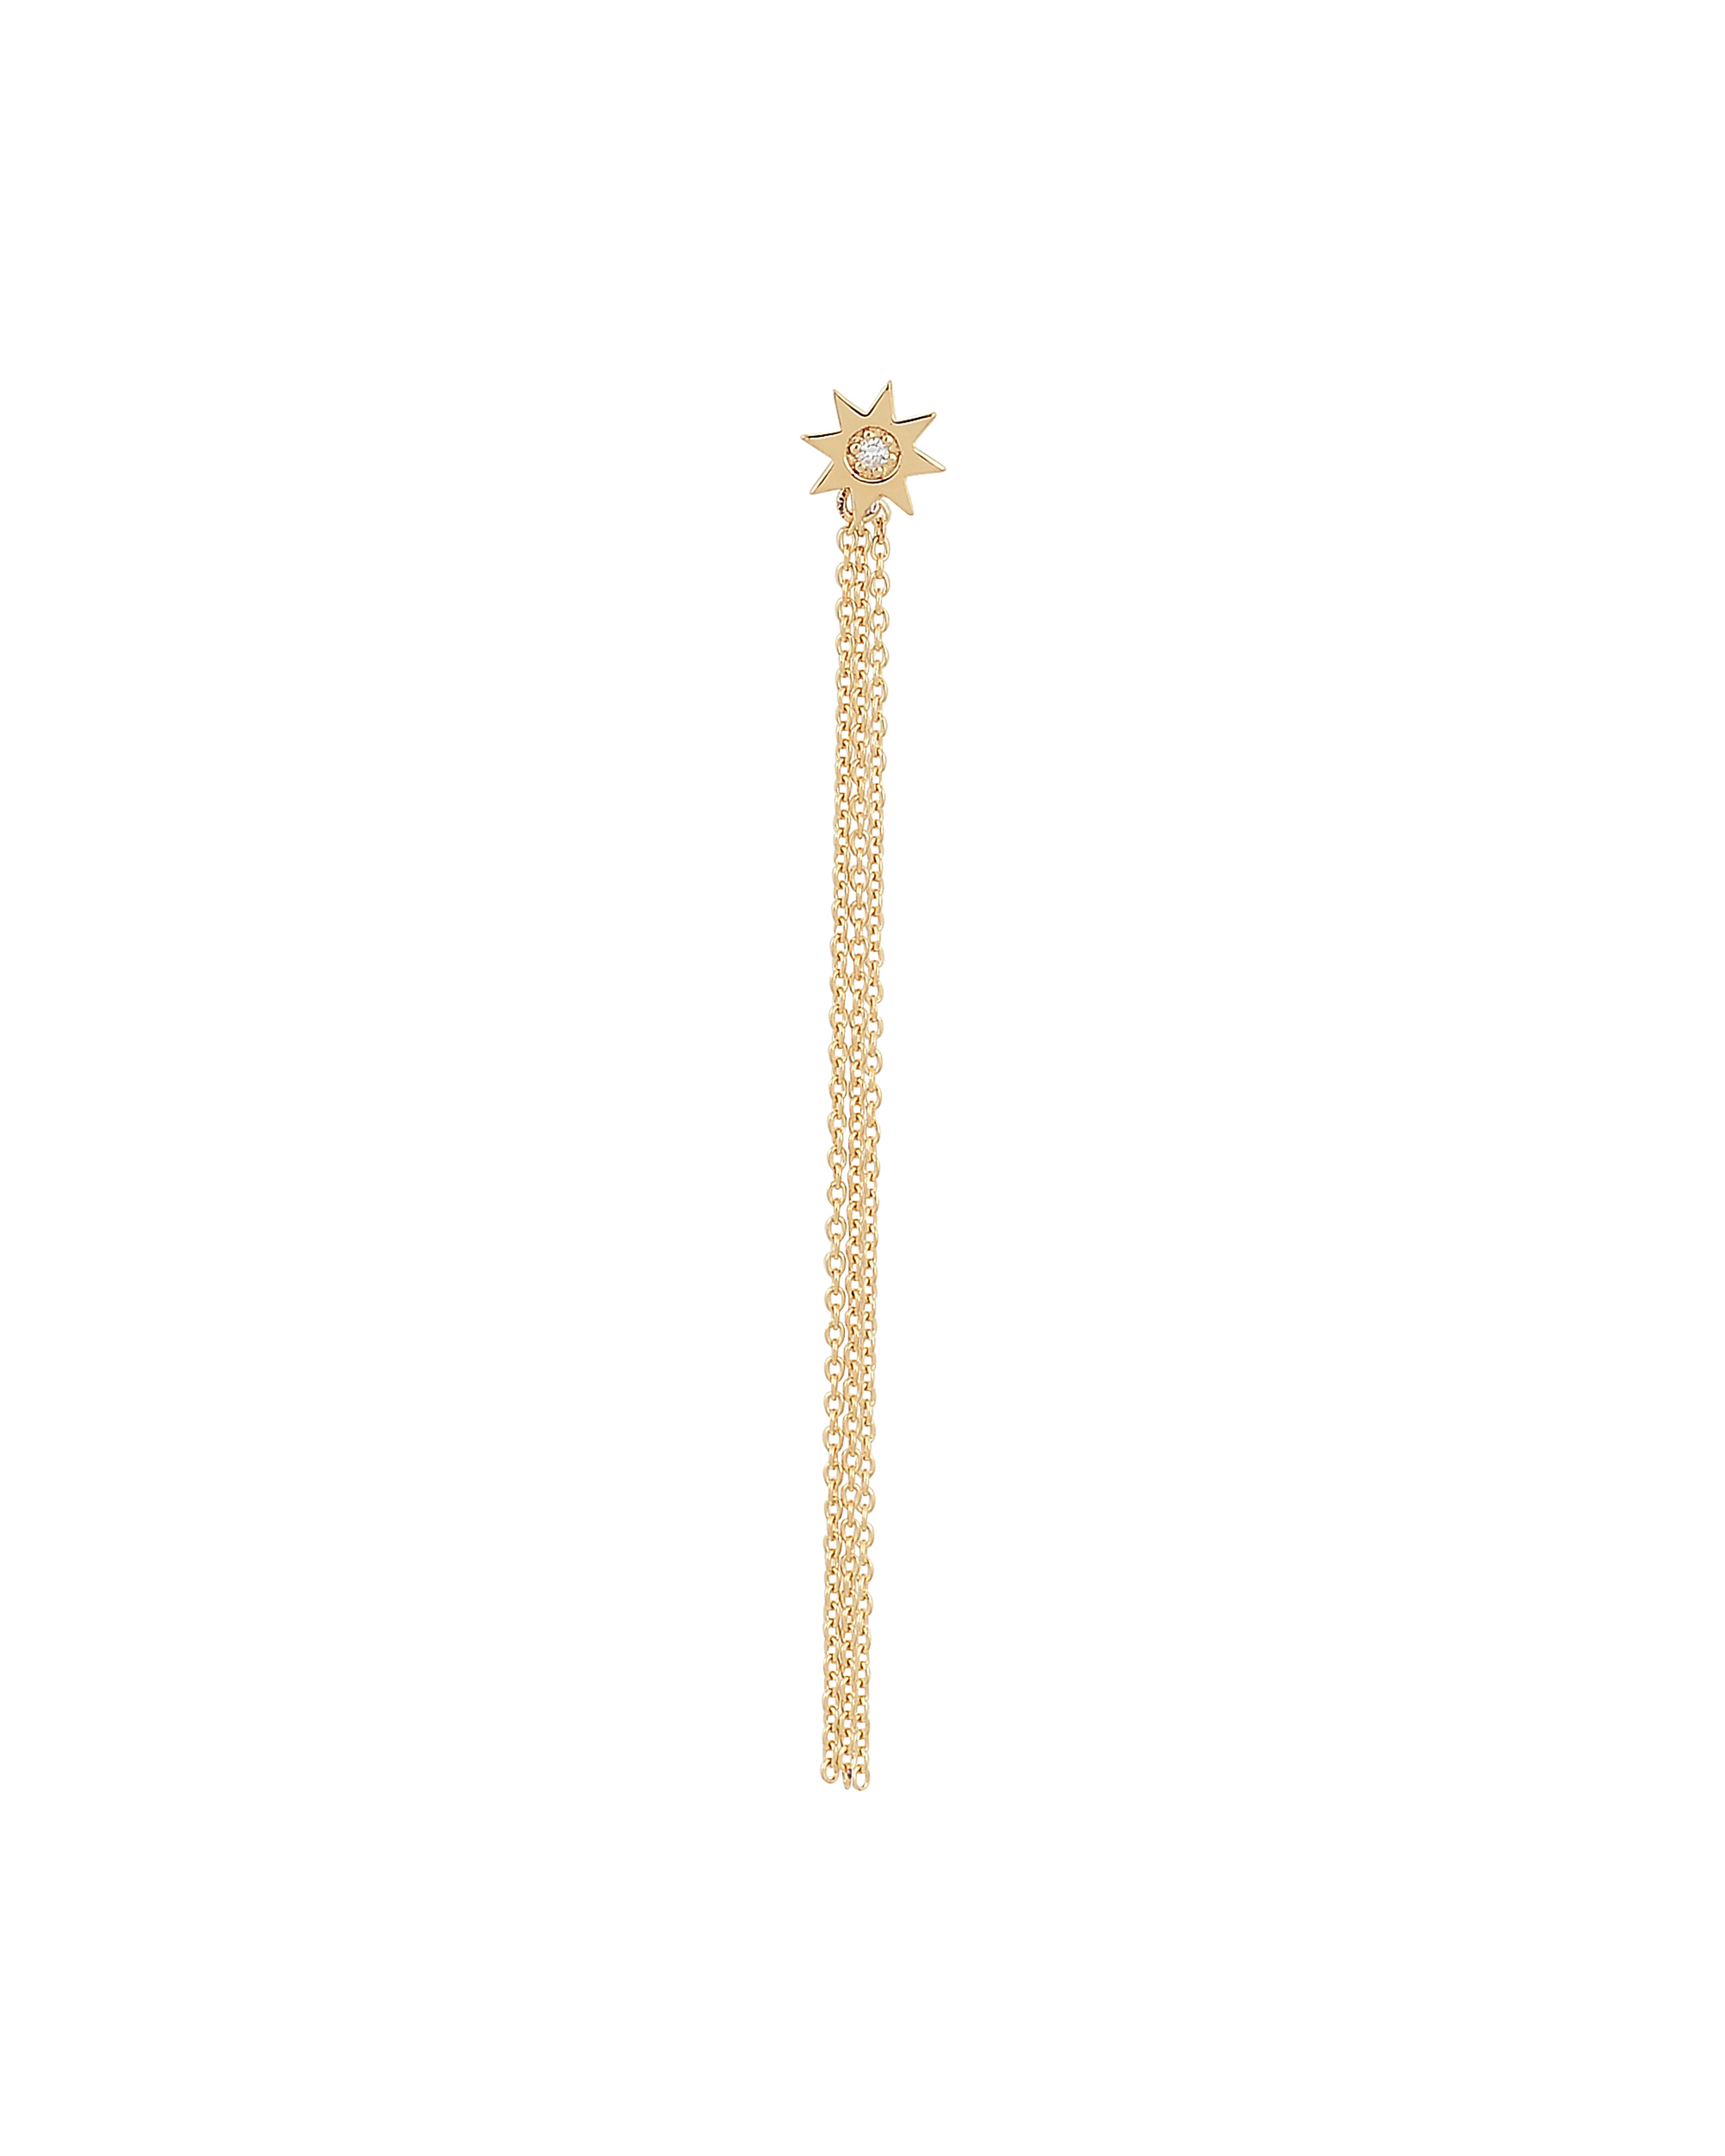 sener-besim-constellation-chain-diamond-stud-gold-earrings